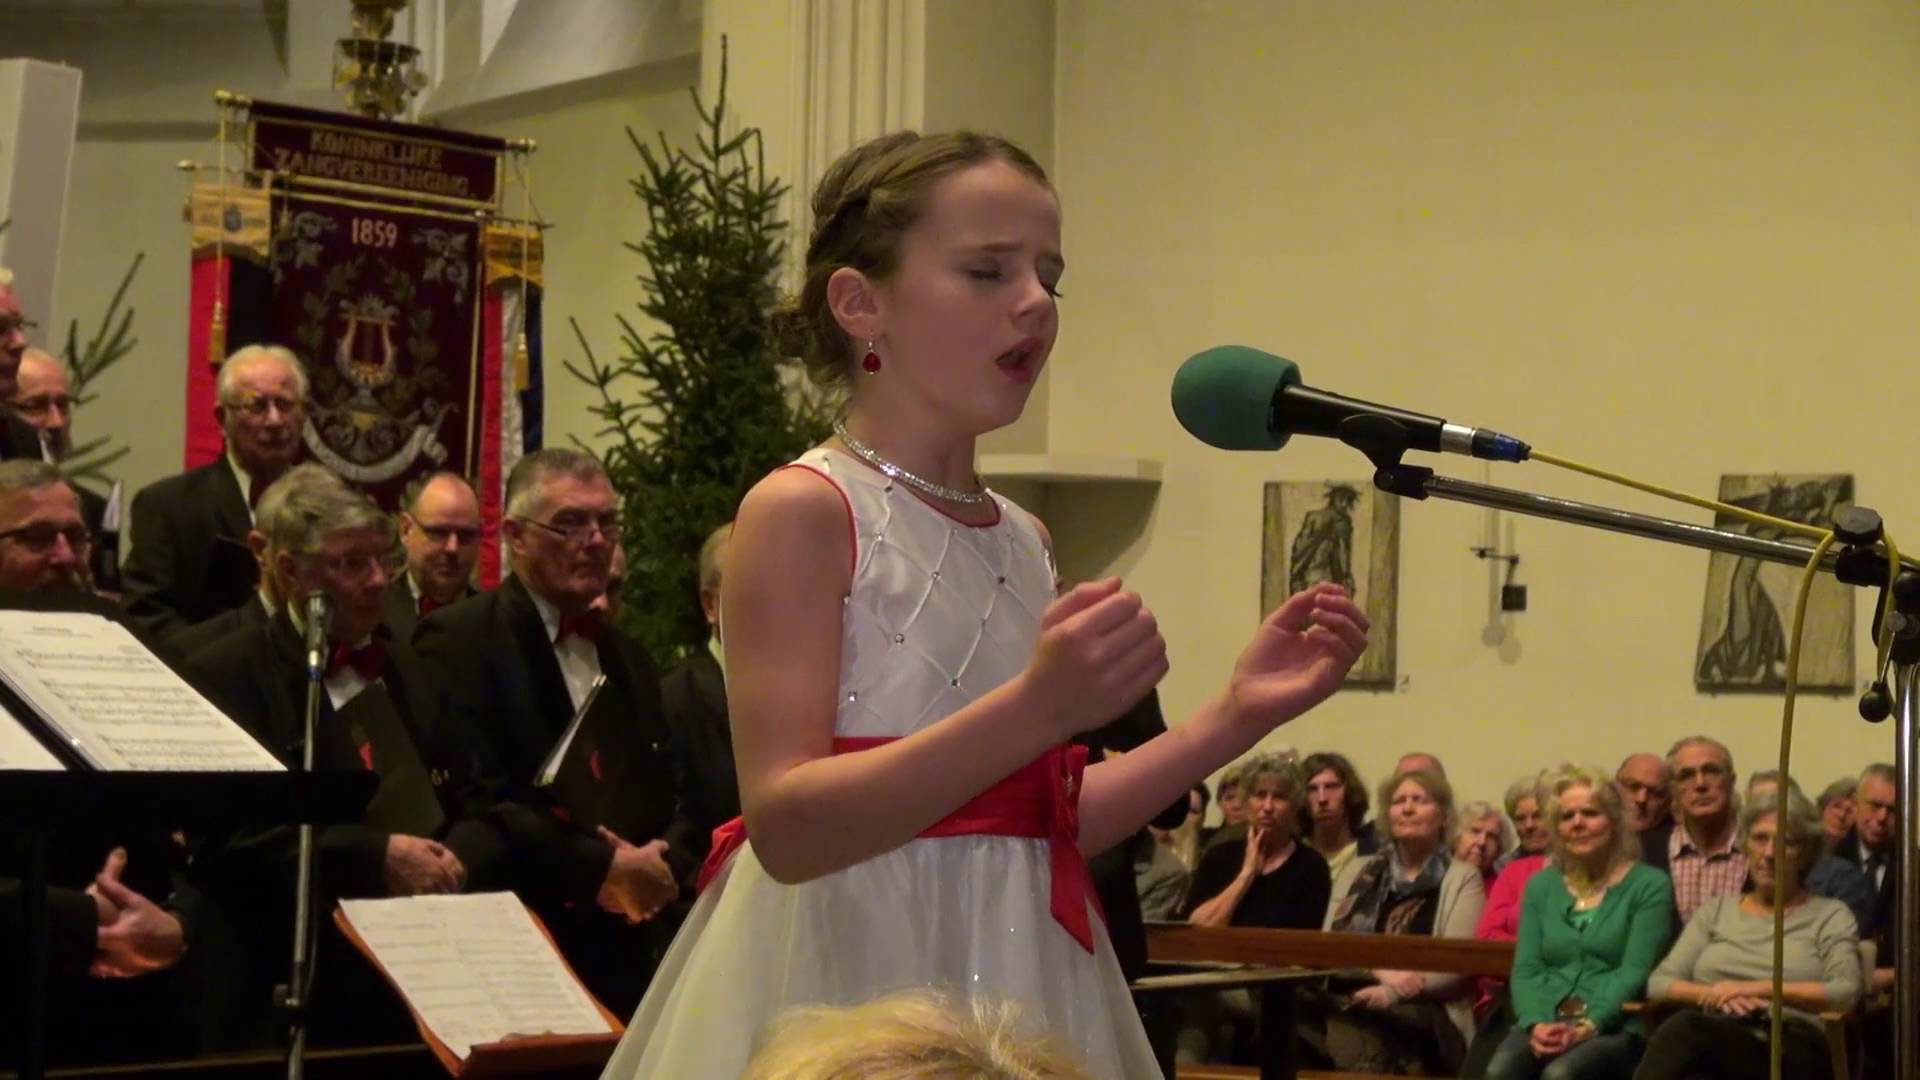 Menina De 11 Anos Com Voz Divinal Encanta Ao Cantar “Sancta Maria”